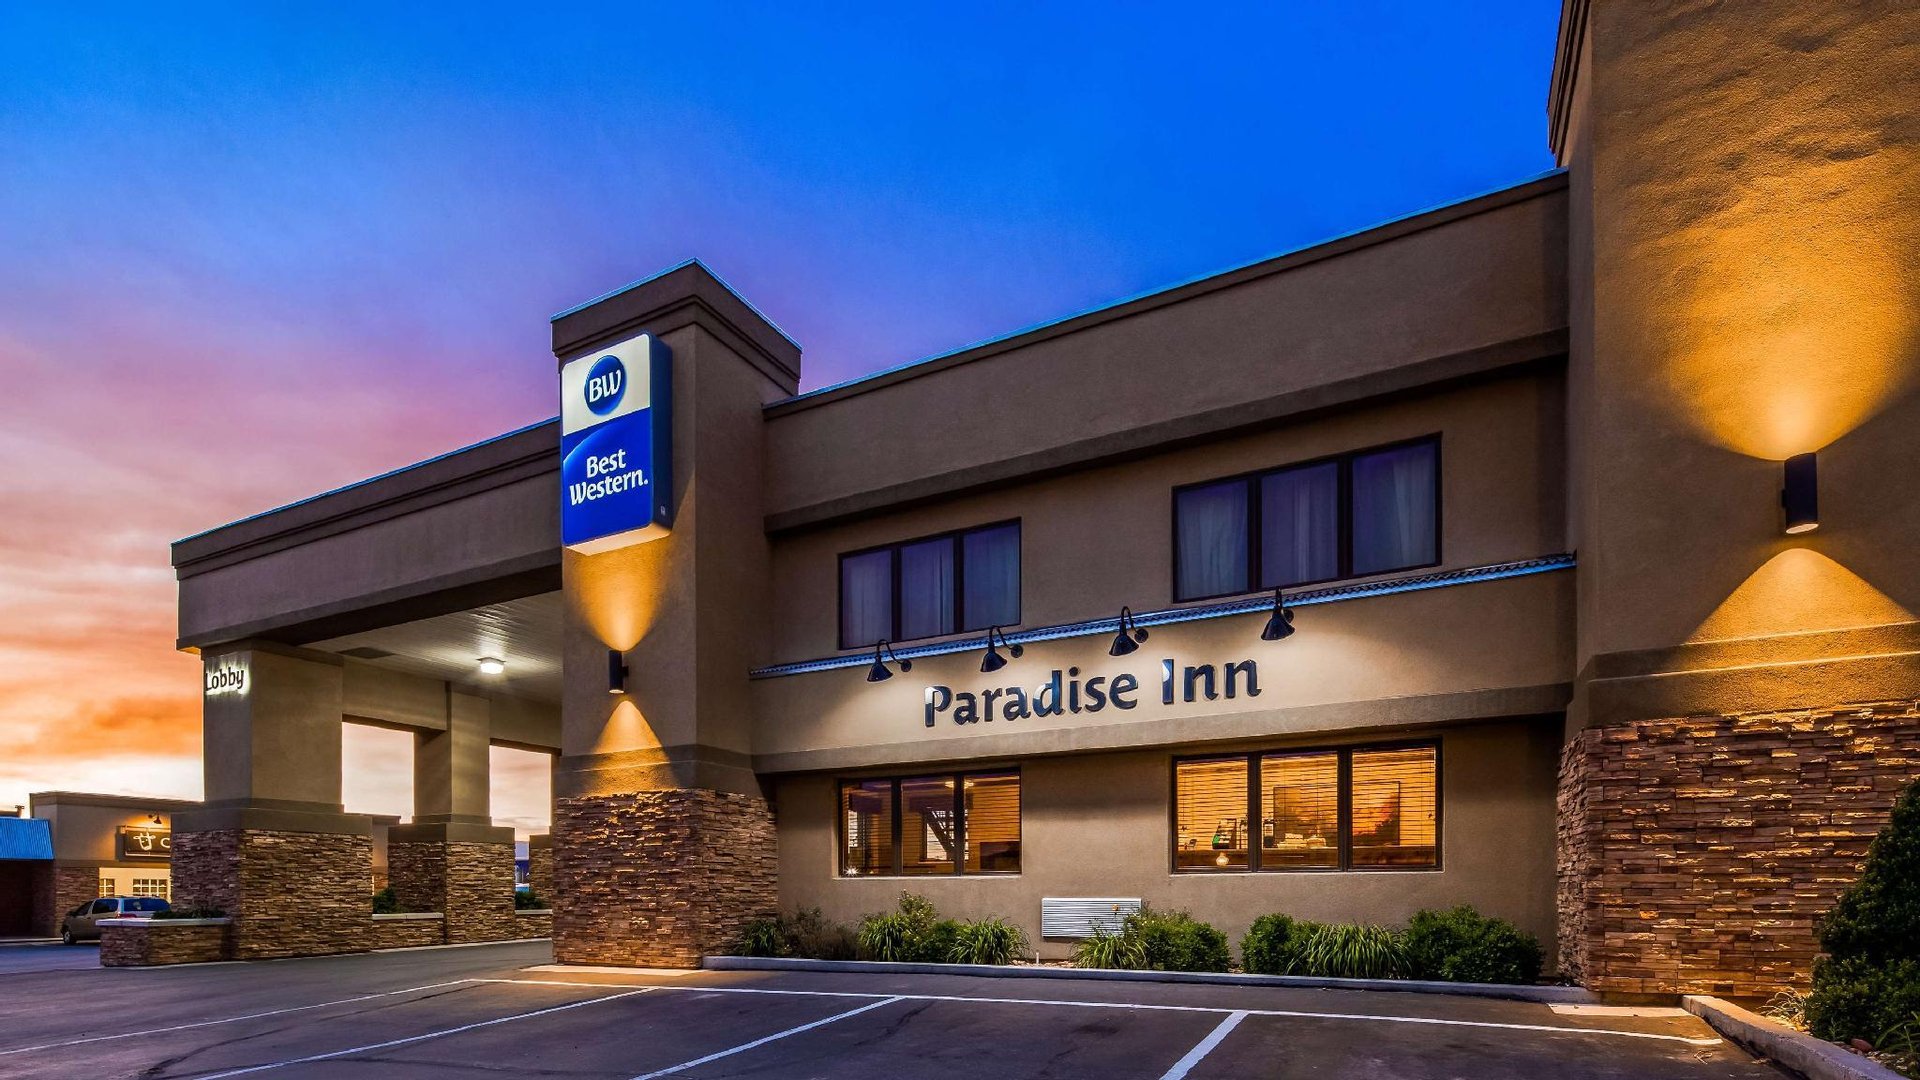 Exterior & Views 1, Best Western Paradise Inn, Beaver